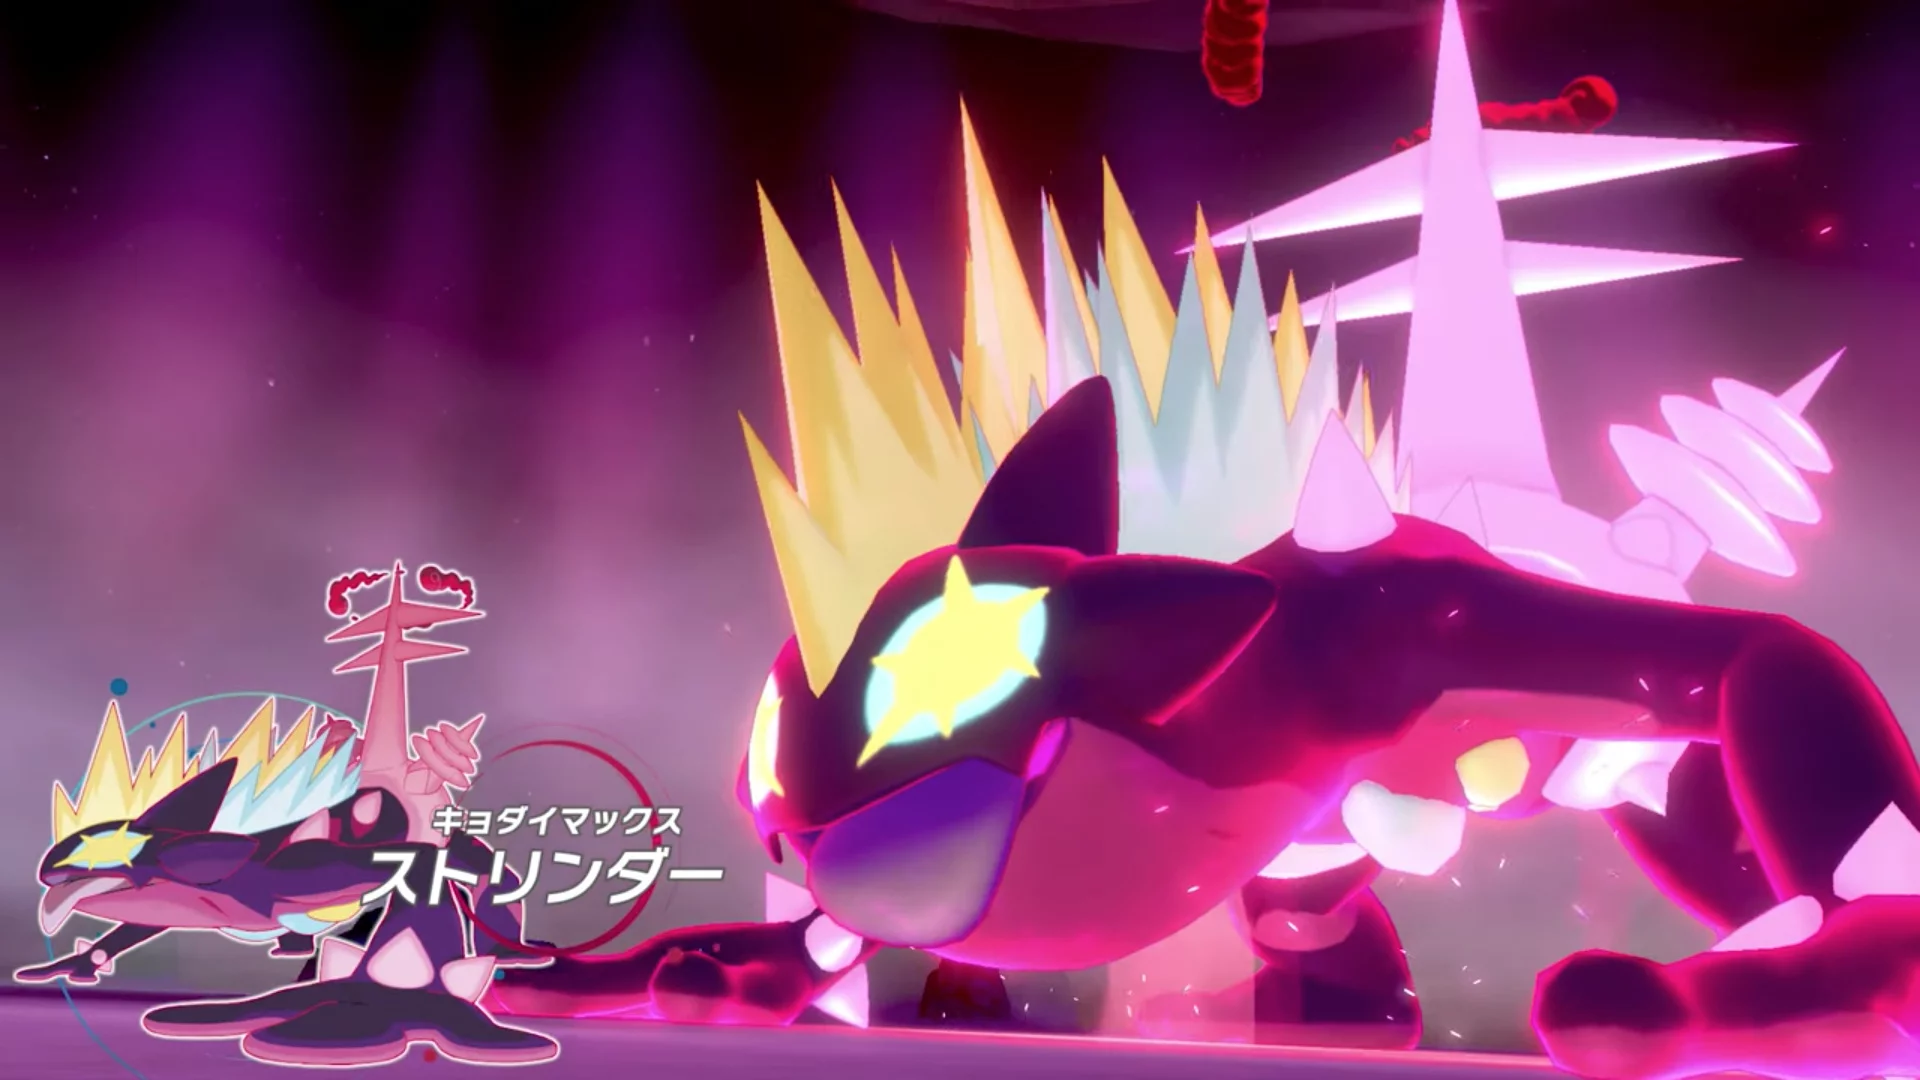 Pokémon Sword & Shield brings Gigantamax Toxtricity to Raid Battles